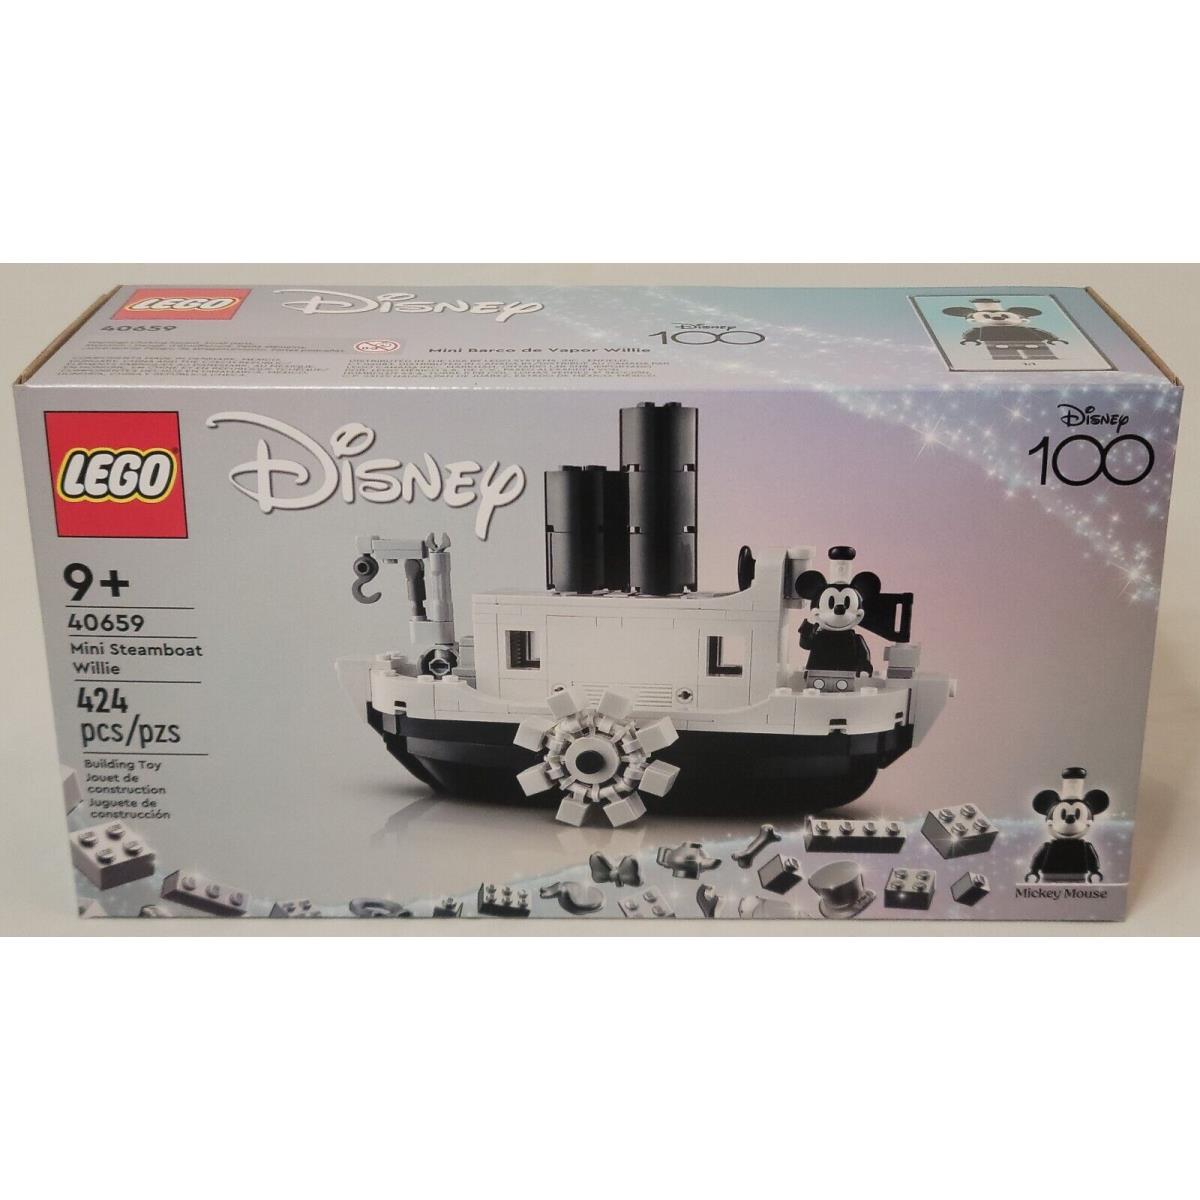 Lego 40659 Mini Steamboat Willie Black White Mickey Mouse Disney 100 Exclusive